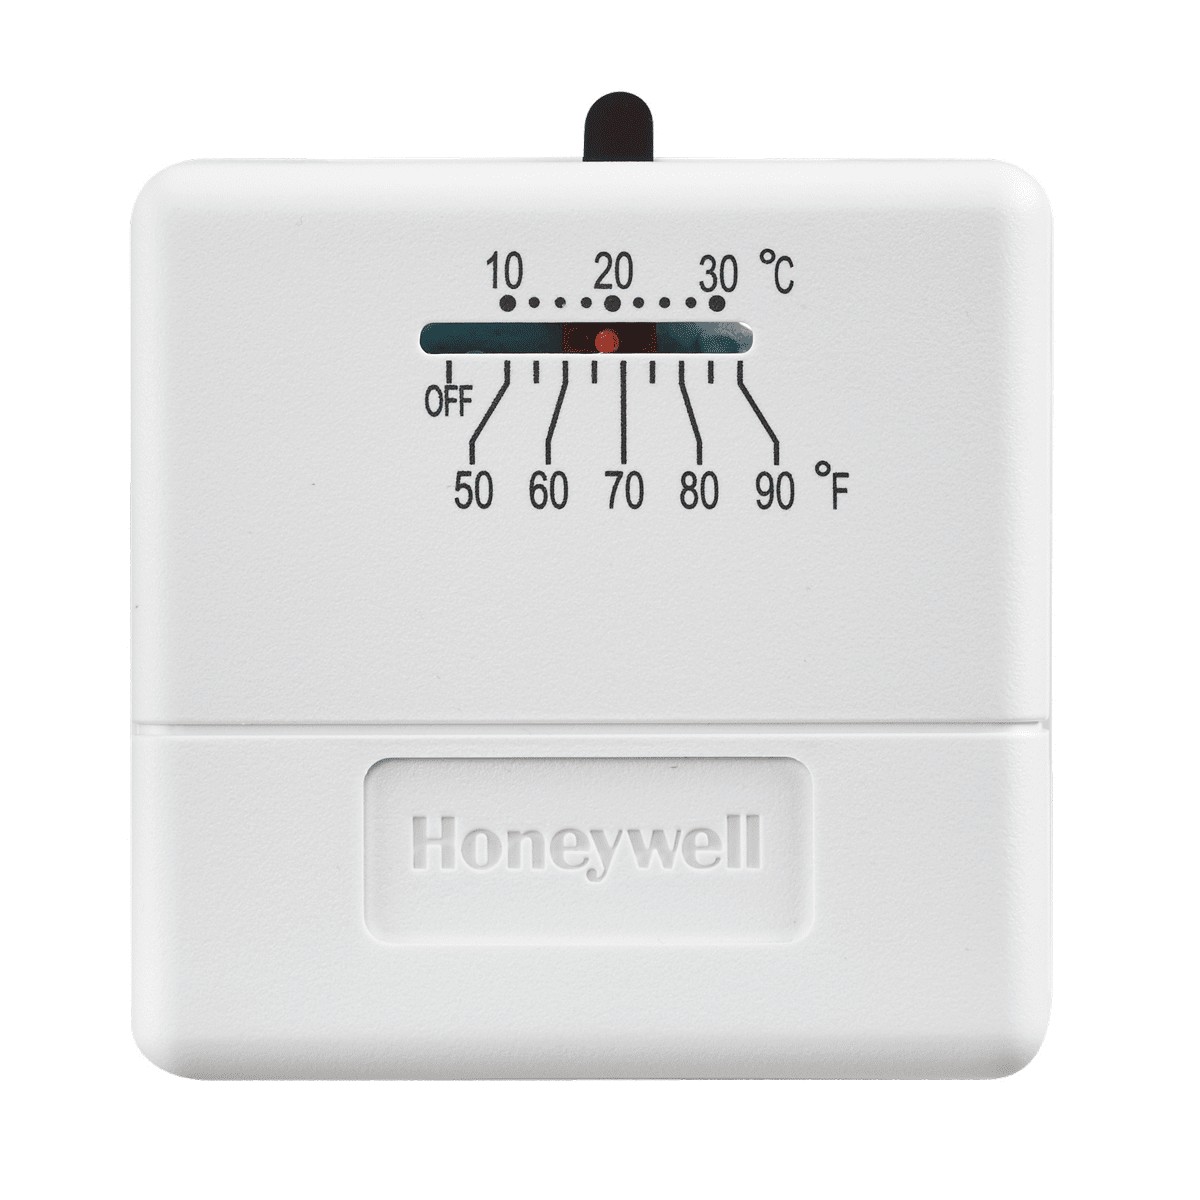 Honeywell Ct33a1009 Heat-only Economy Millivolt Thermostat